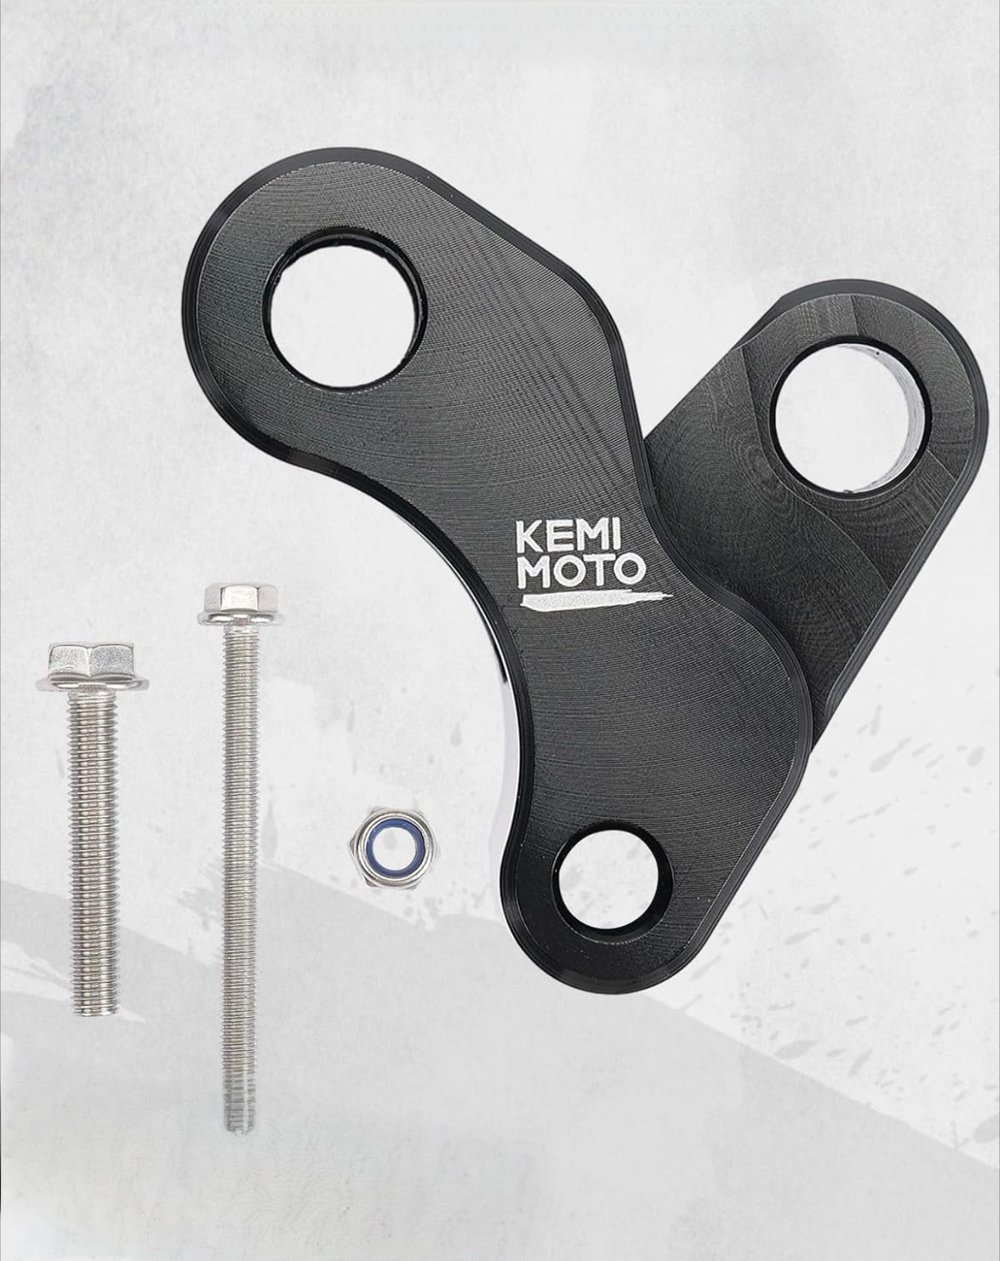 NAVi 110 Kemi Moto Rear Shock Lowering Kit